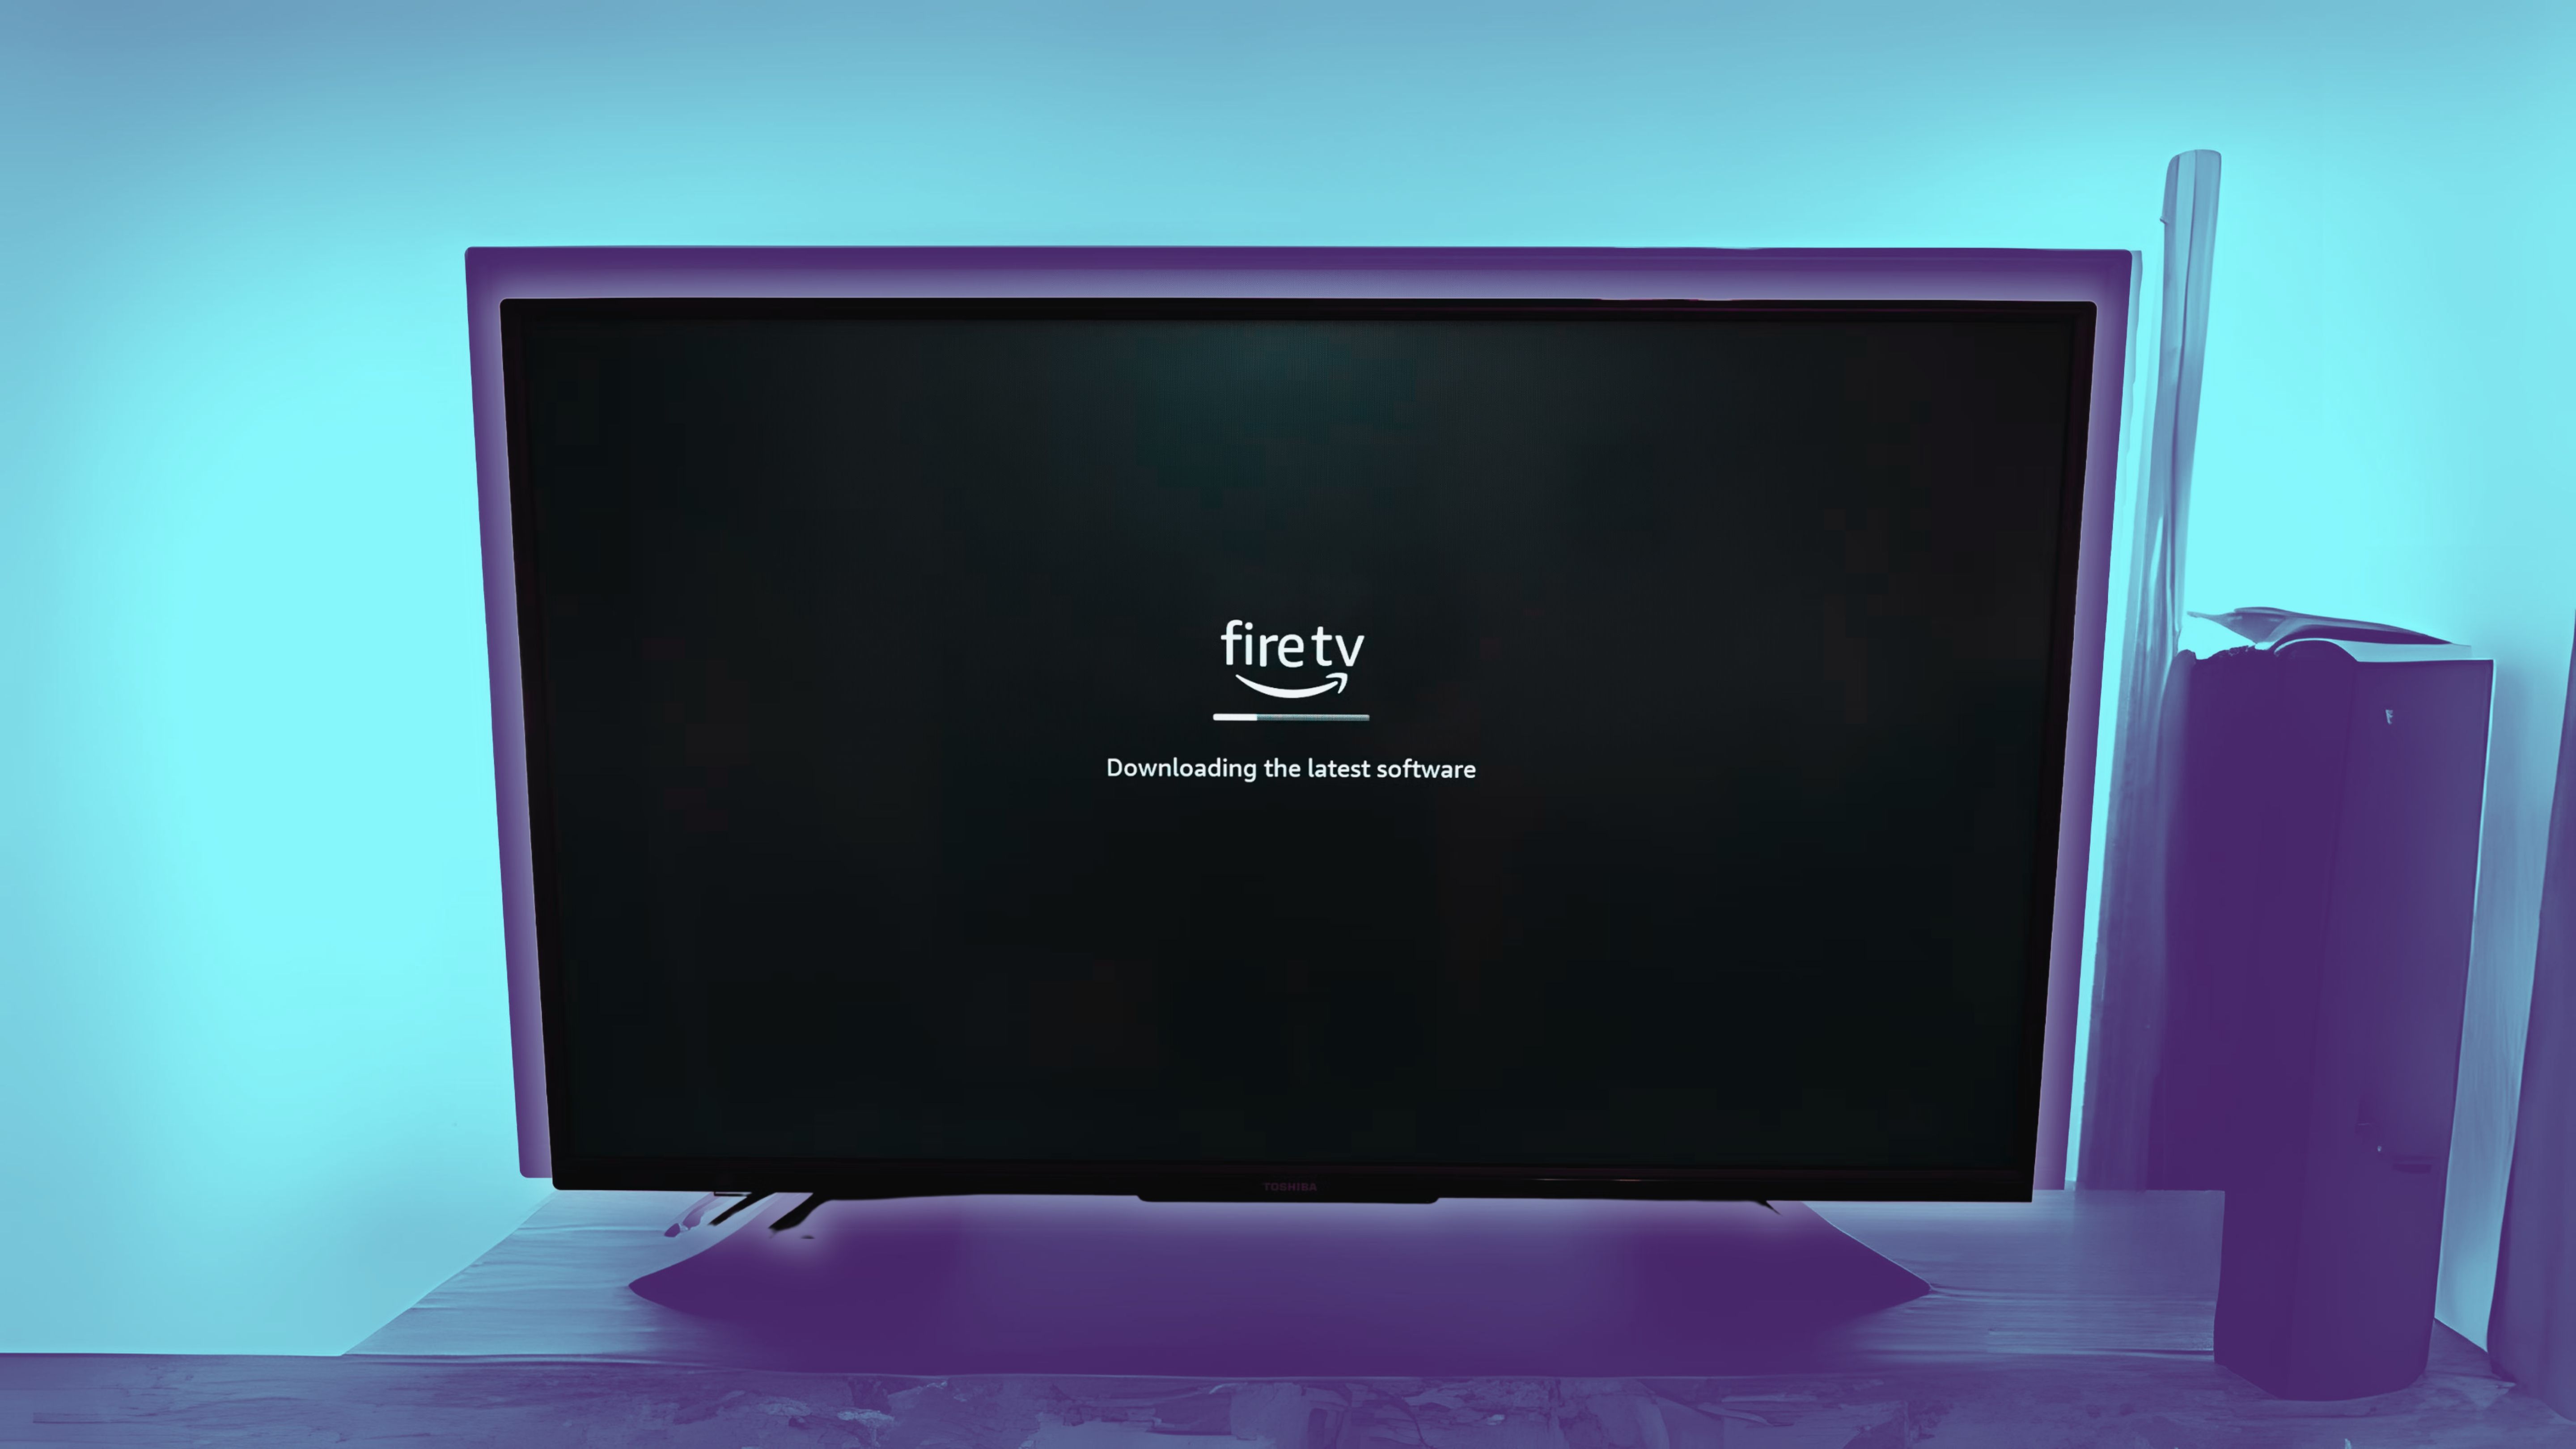 Fire TV running a software update against a blue background.